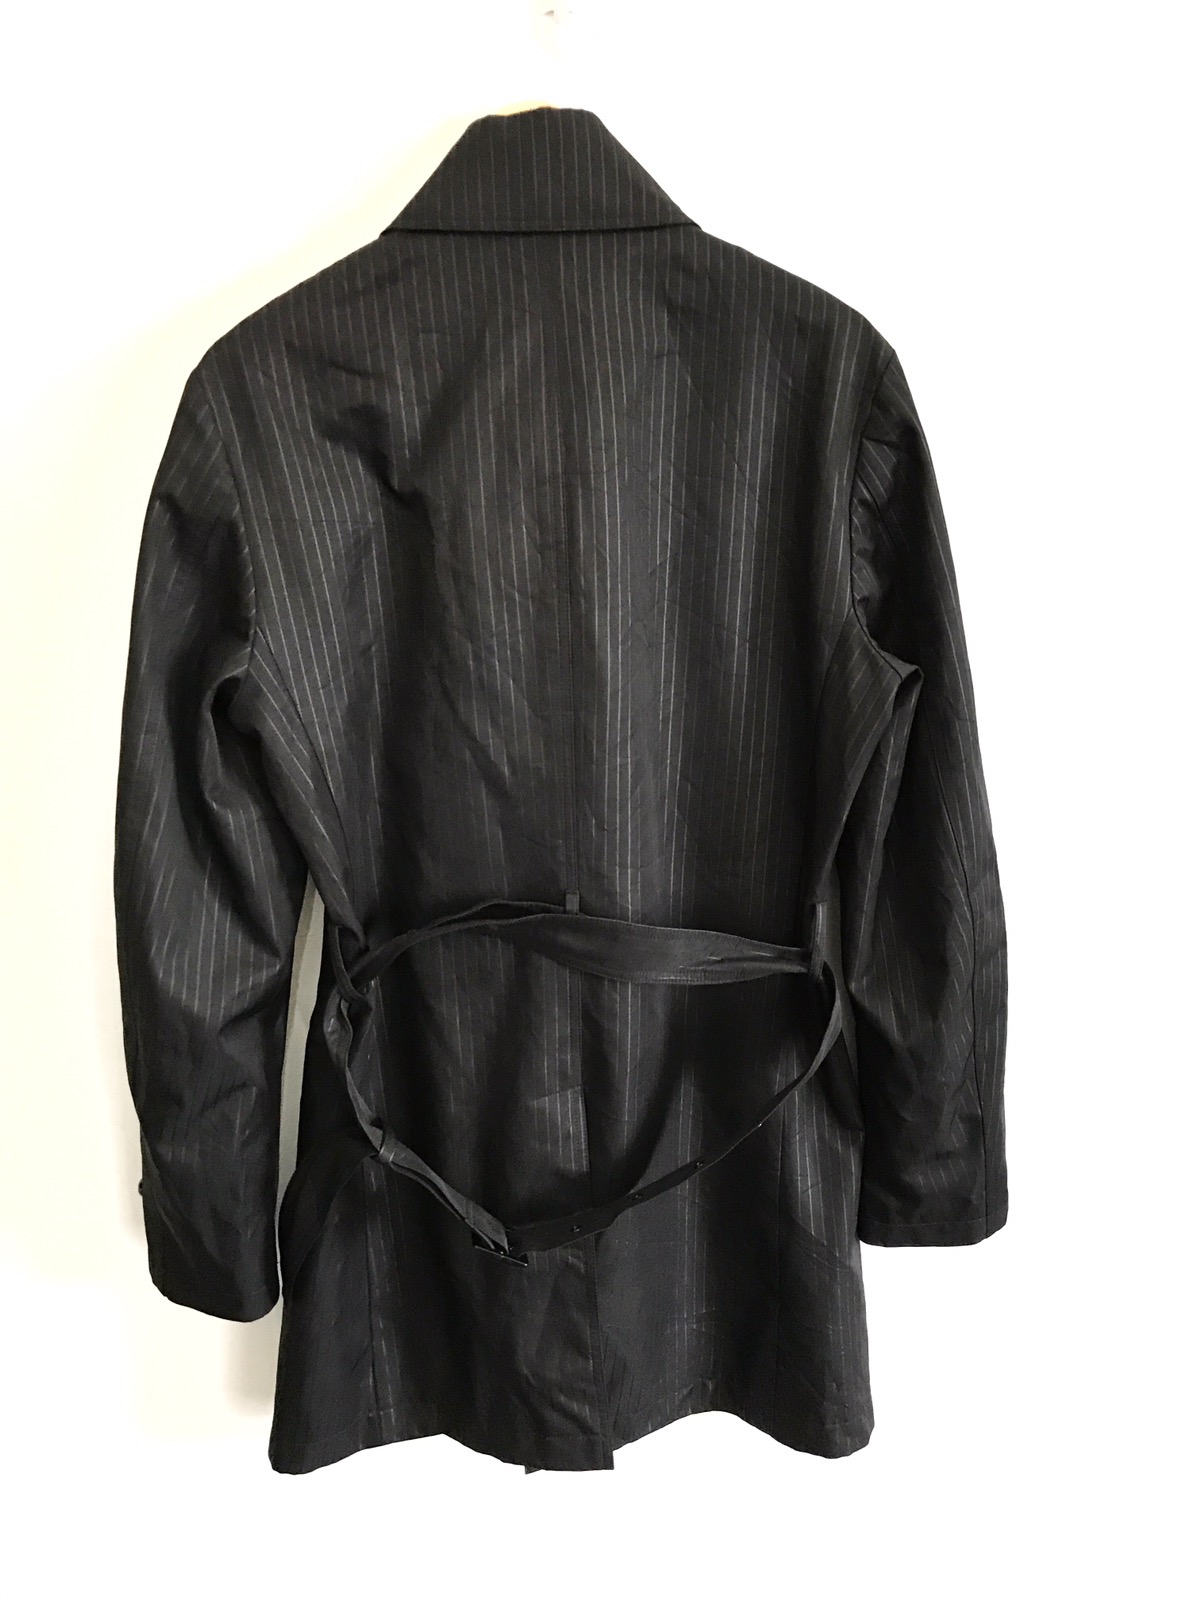 Japanese Brand Roen x Semantics Design Trench Coat Jacket - 3